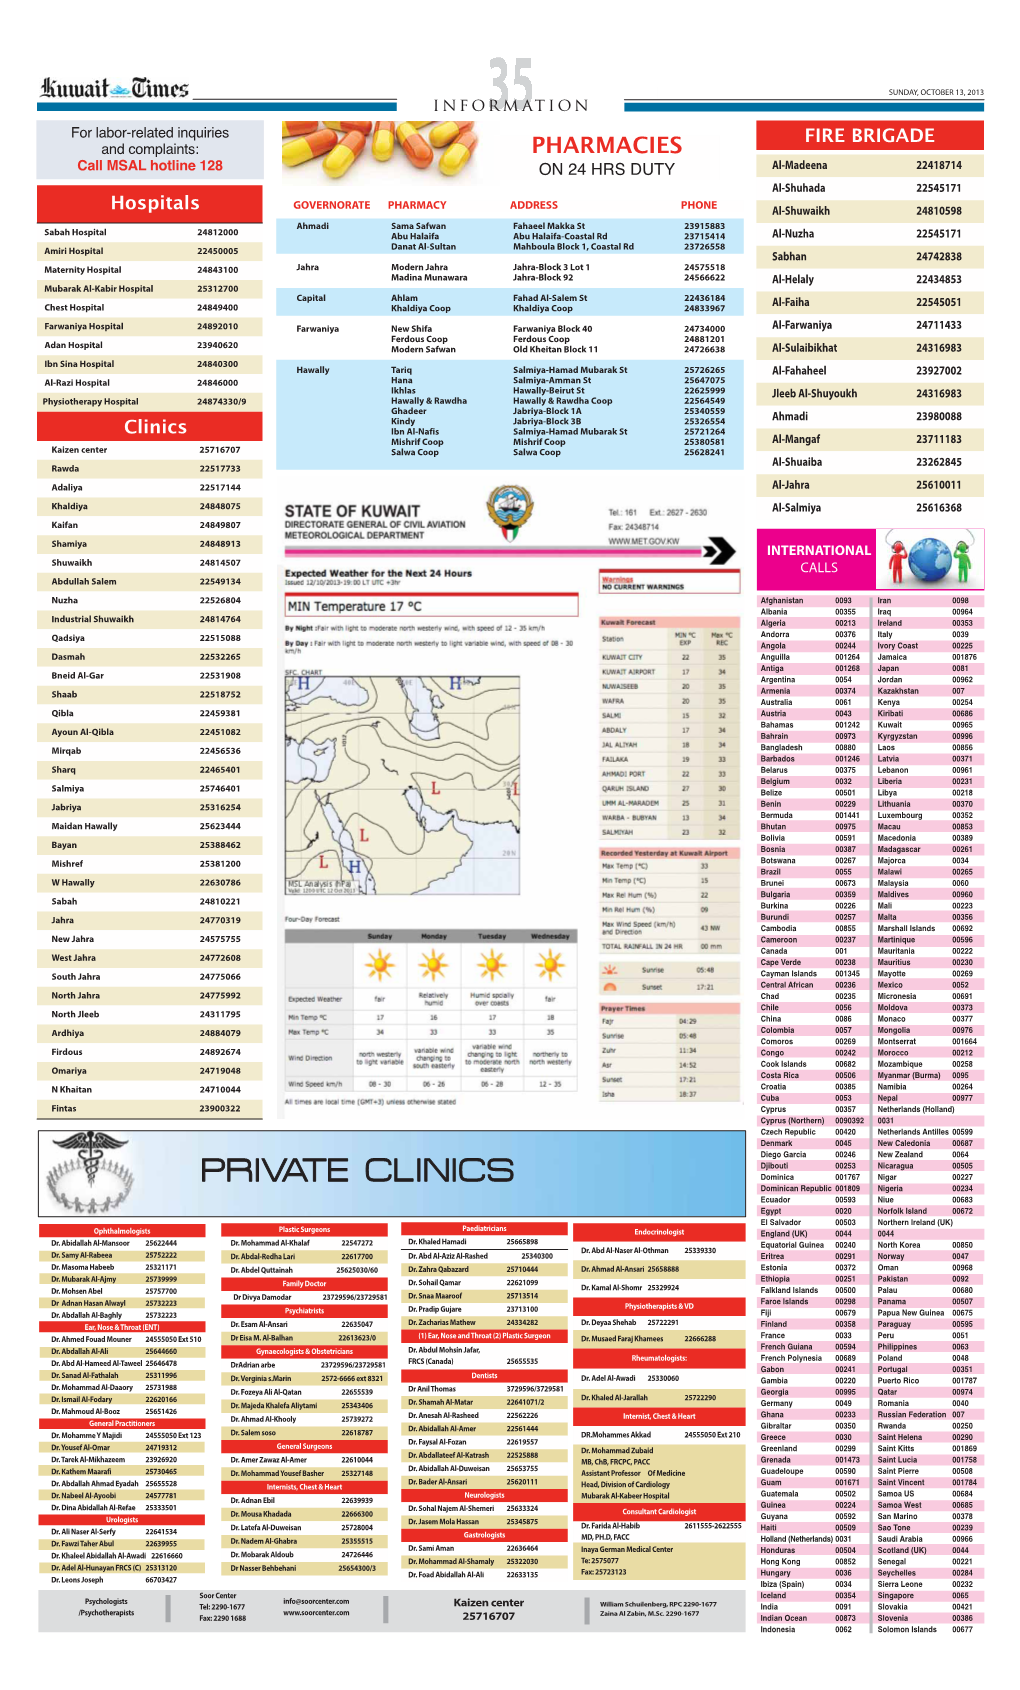 Private Clinics